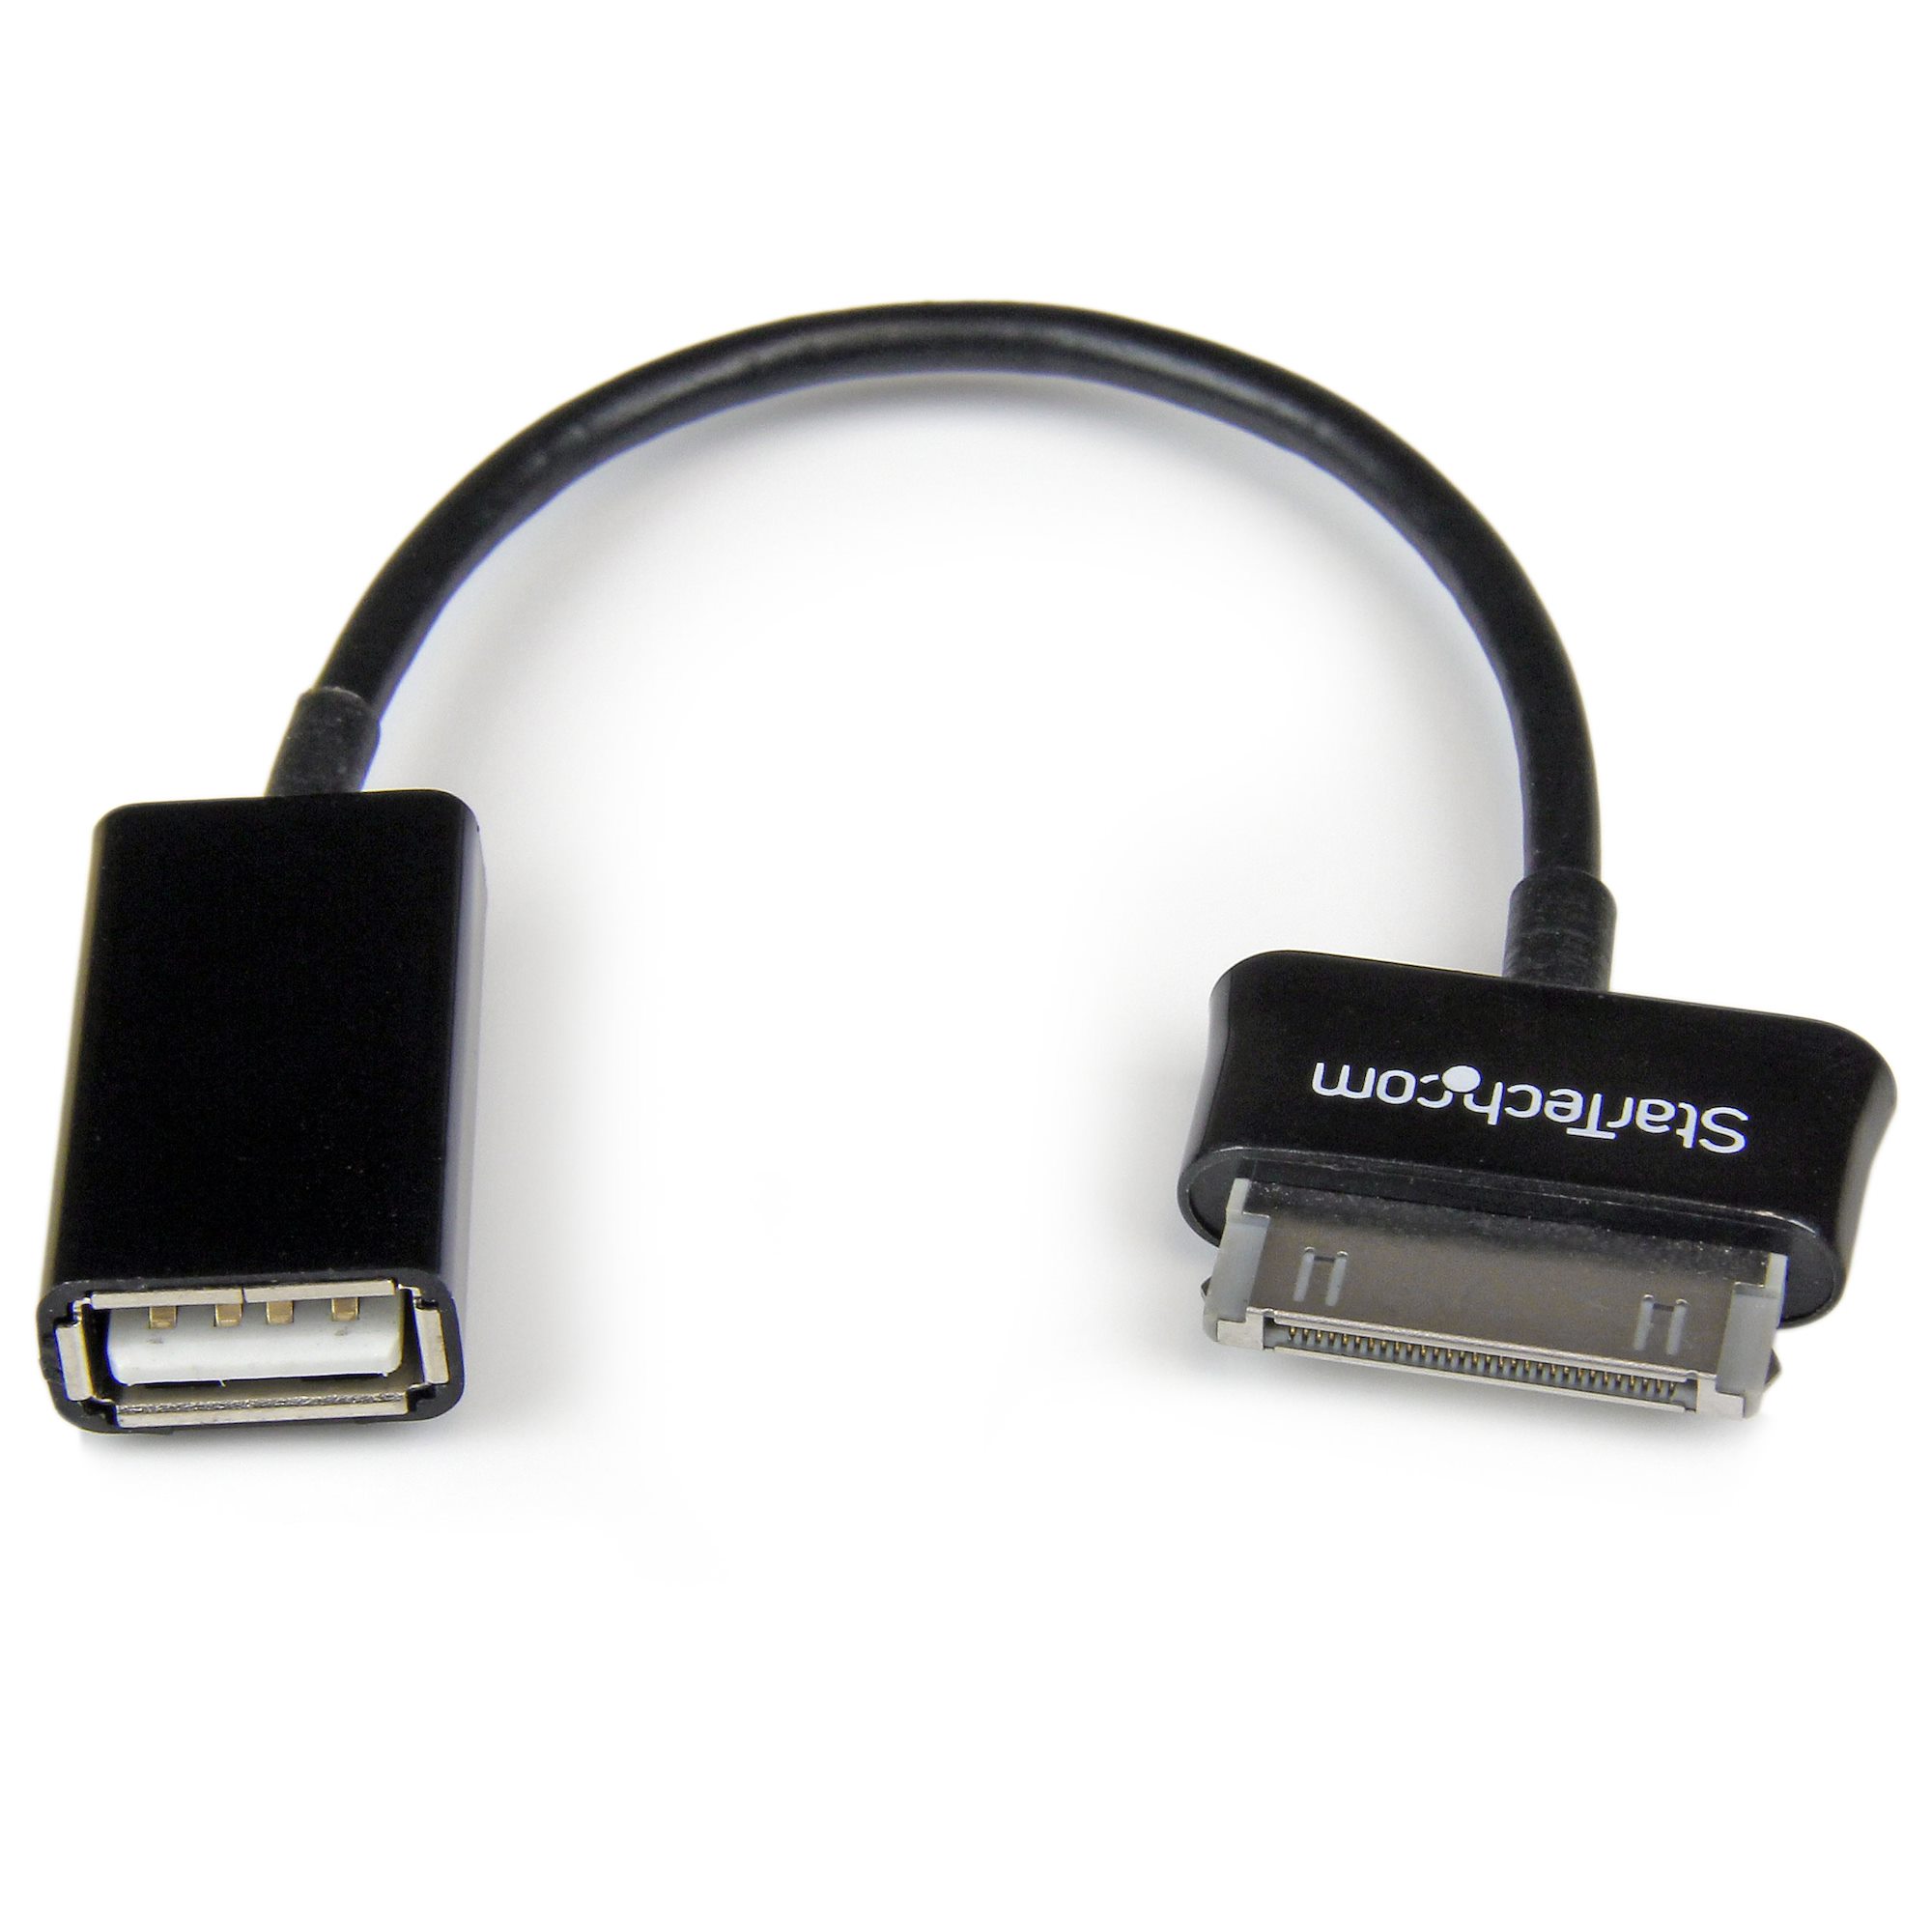 Samsung Galaxy USB Adapter Cable - USB Adapters (USB 2.0) | StarTech.com